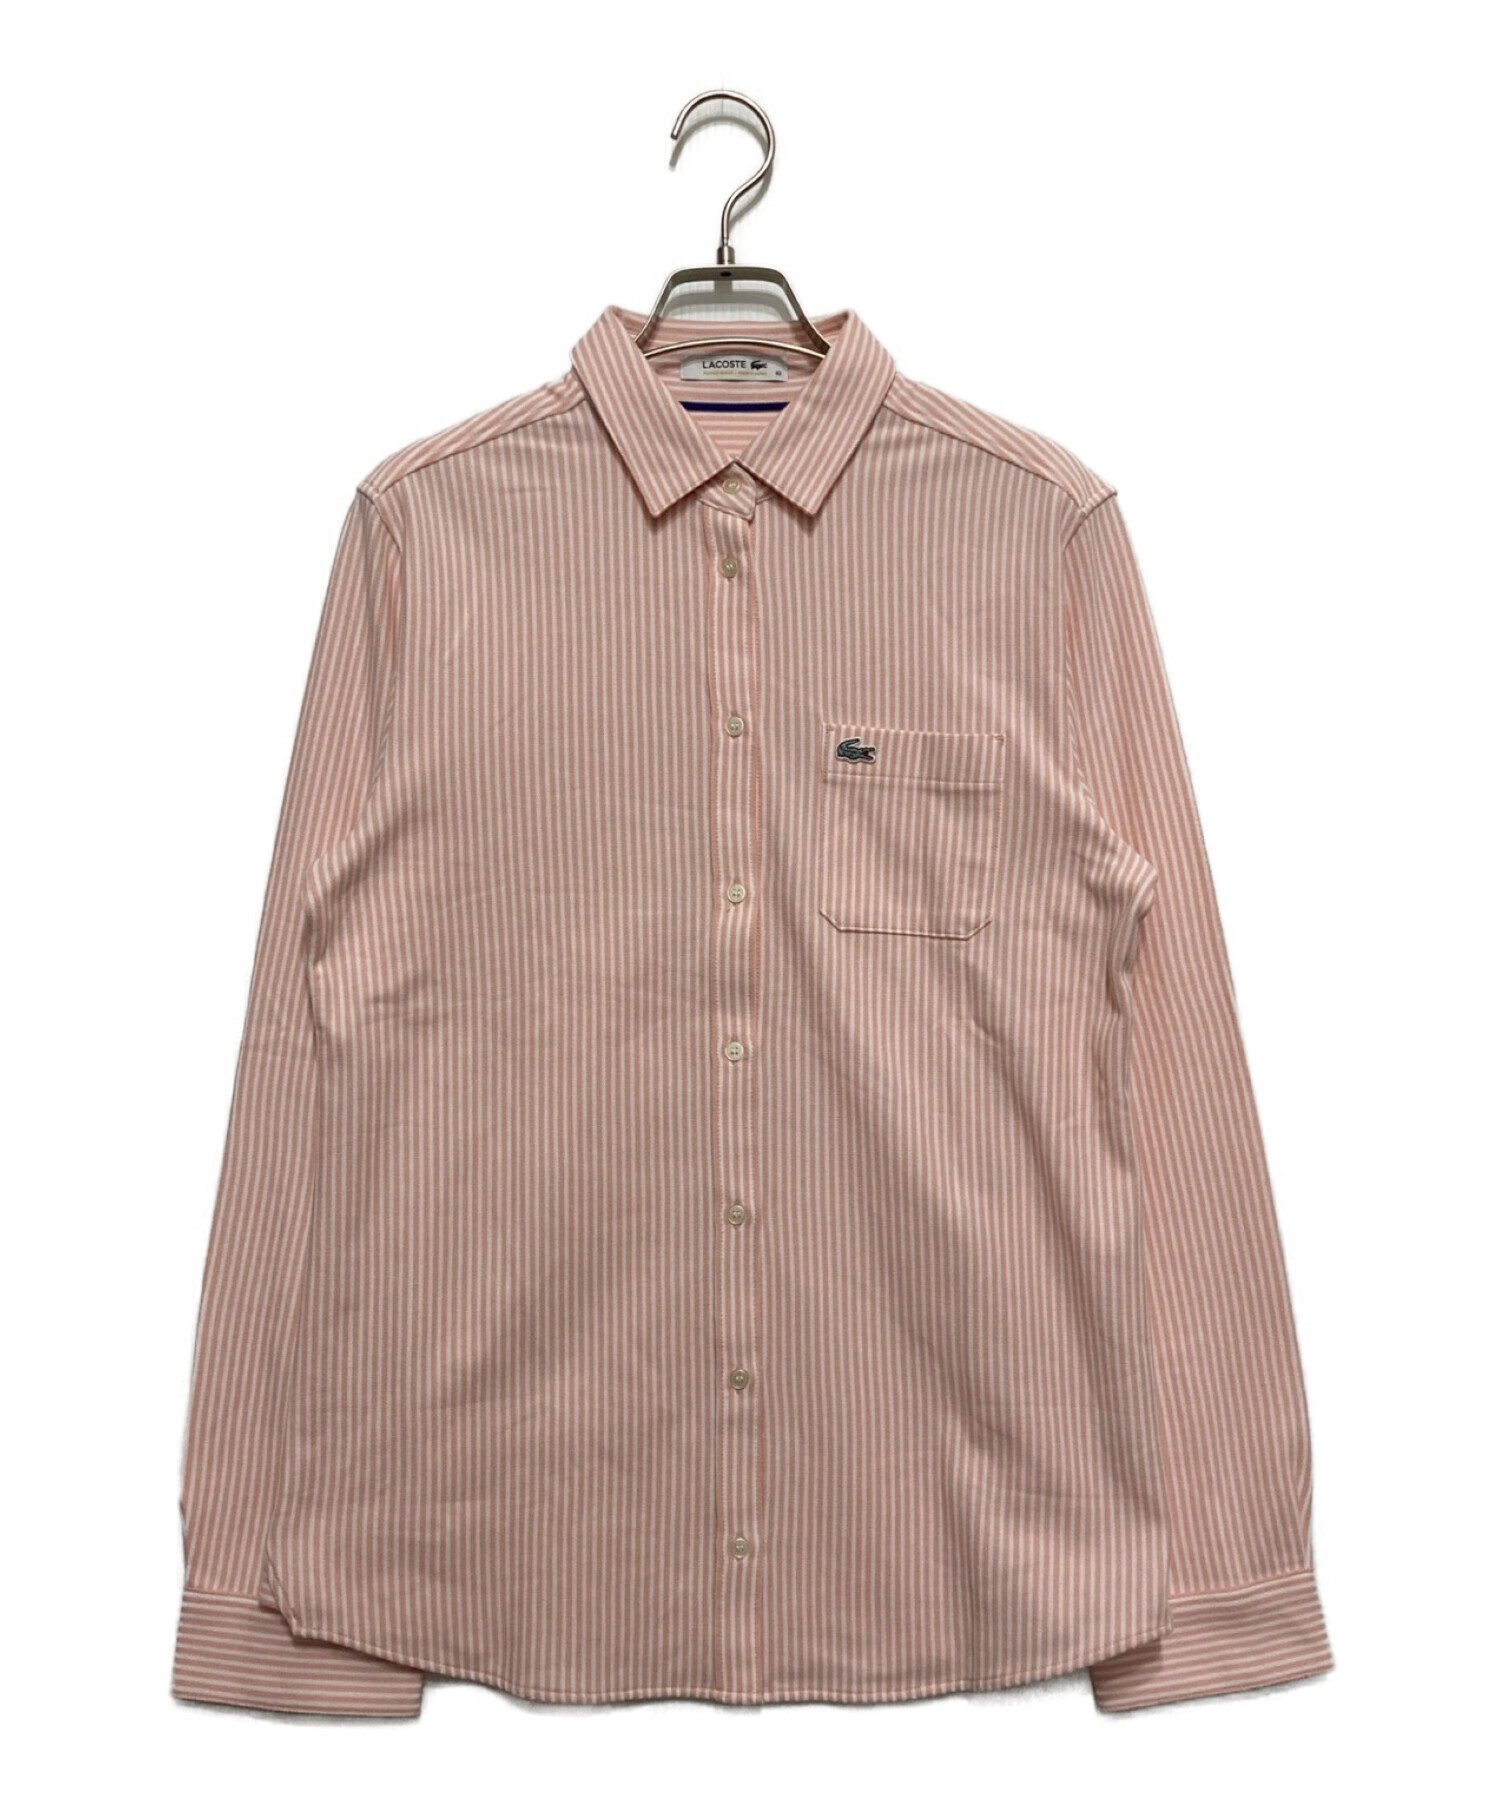 LACOSTE (ラコステ) 長袖ストライプニットシャツ ピンク サイズ:SIZE40